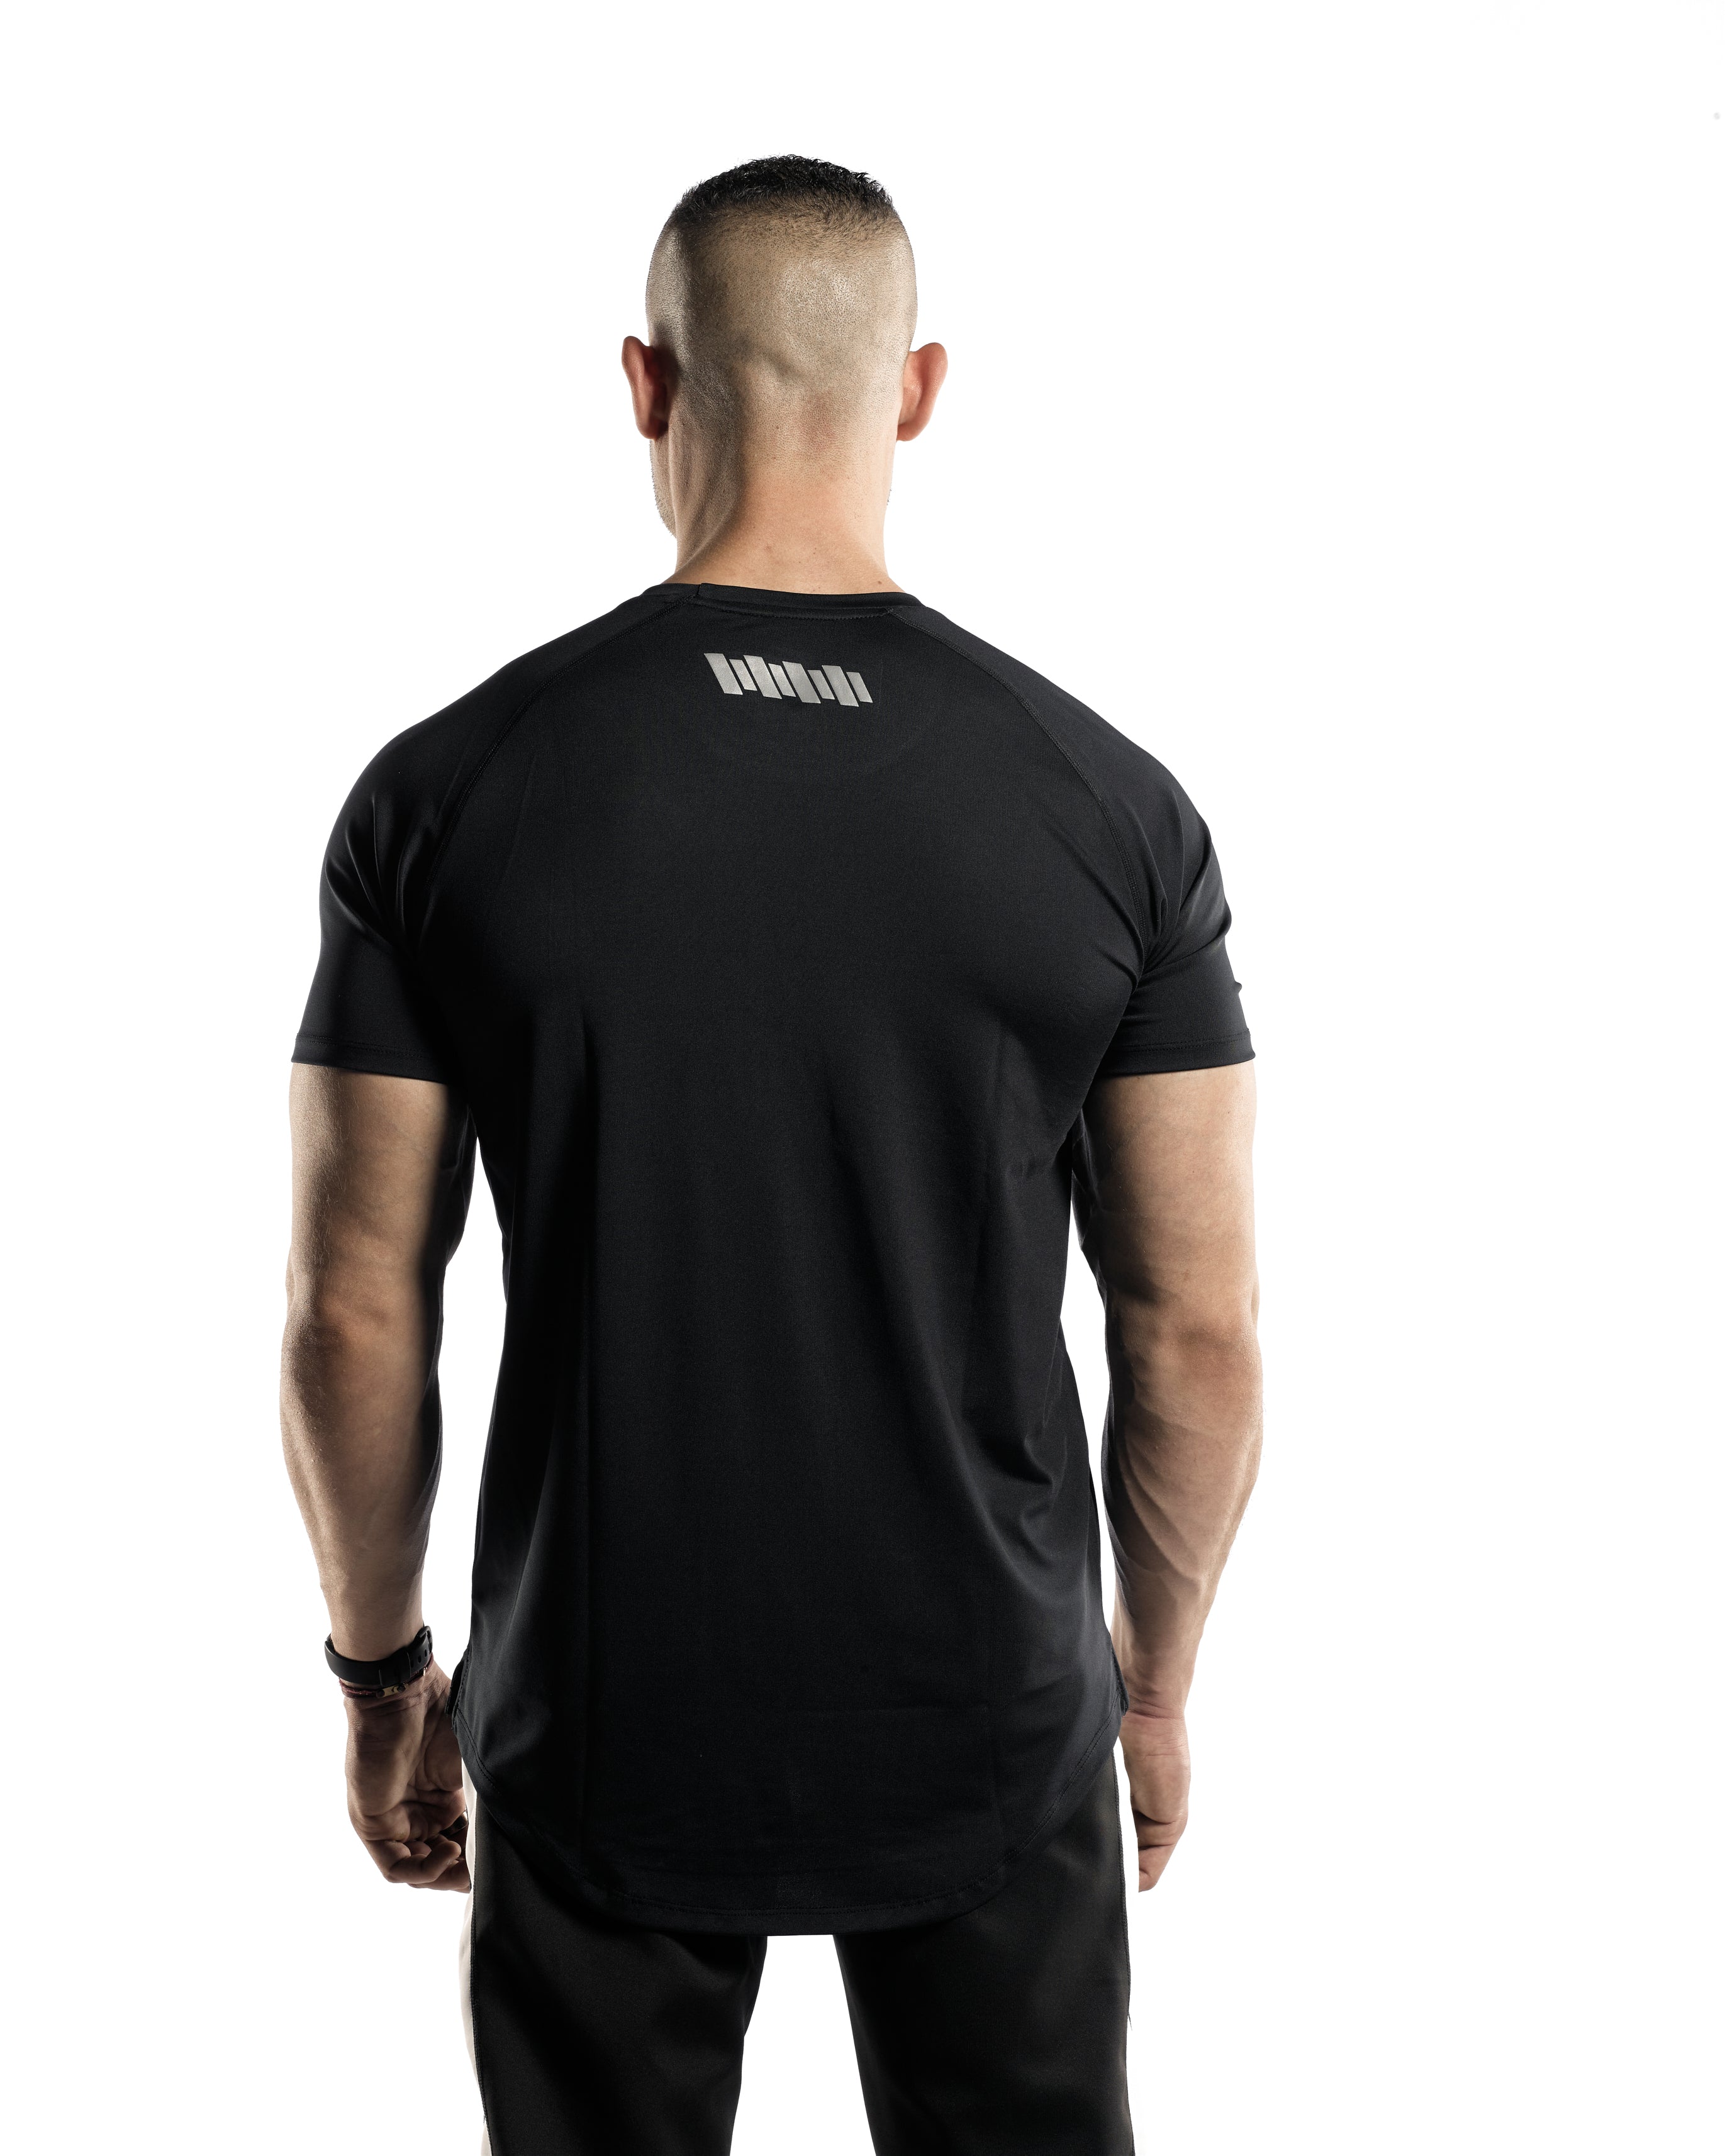 ULTRA Raglan T-Shirt [Black] -  - Gym Apparel Egypt